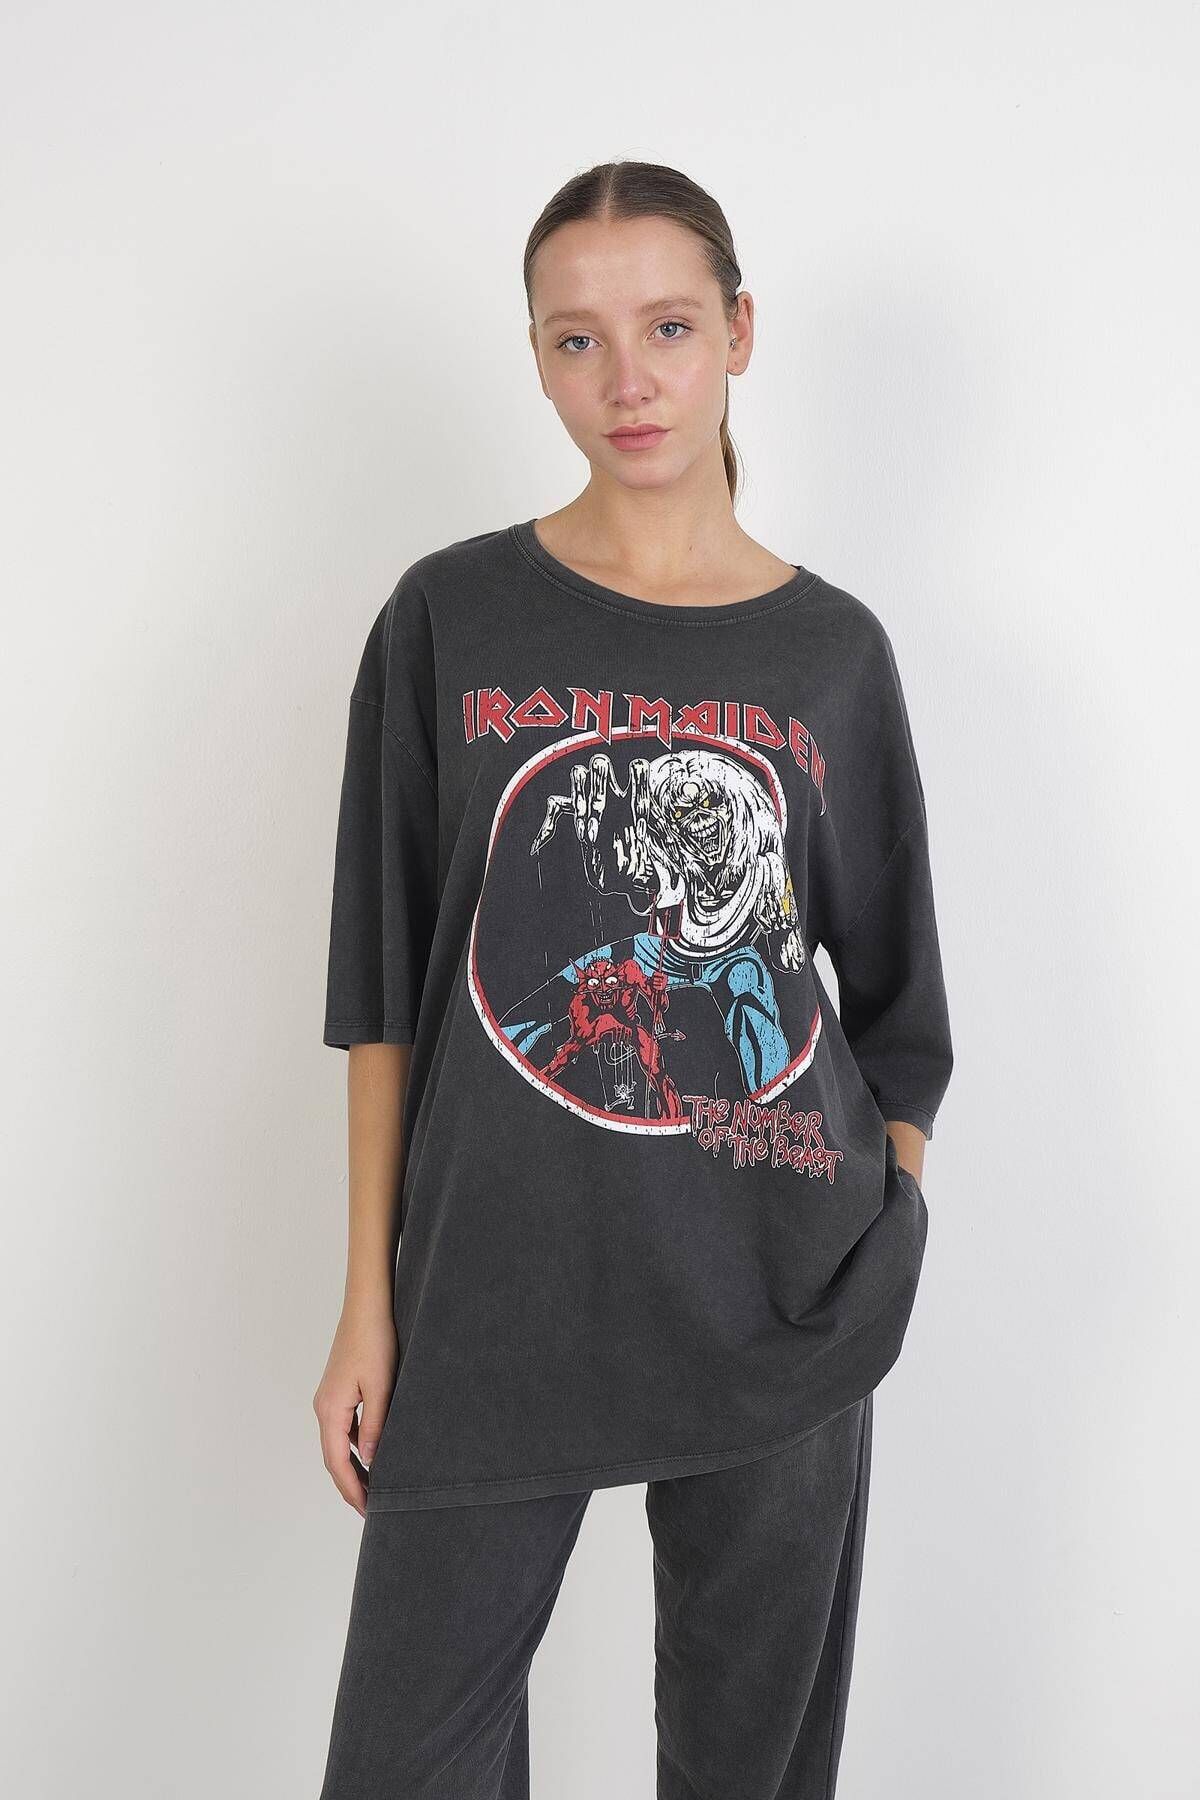 Addax Soluk Efektli Iron Maiden Baskılı T-shirt P10179-b7